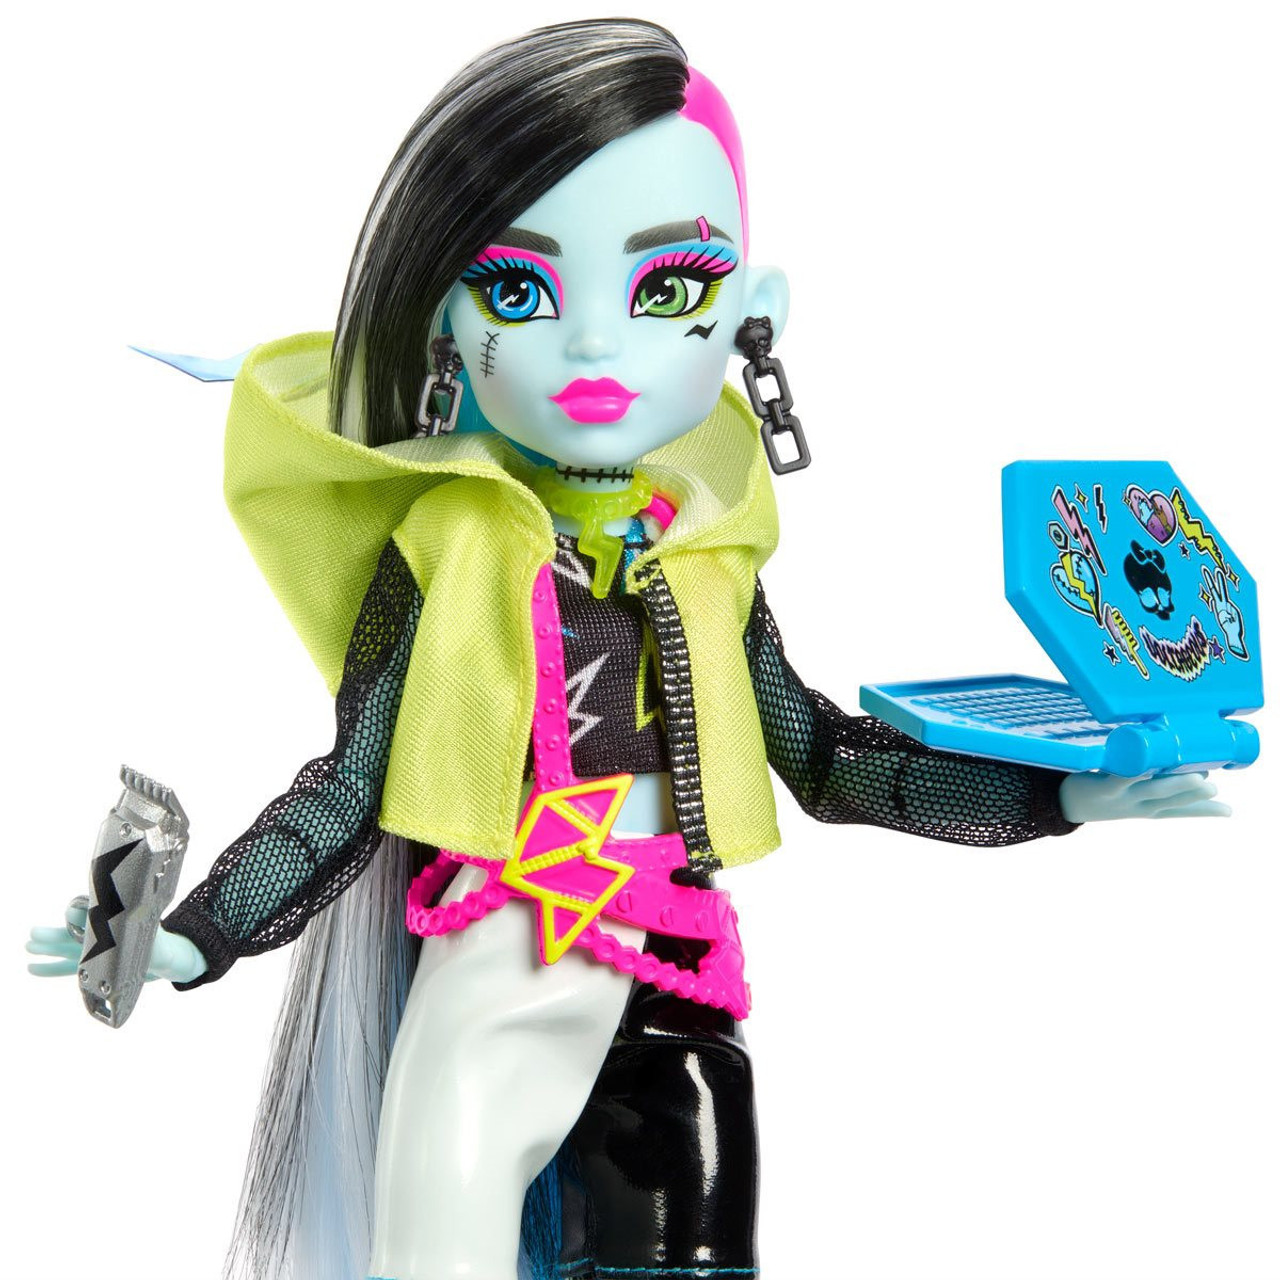  Monster High Frankie Stein Doll : Toys & Games